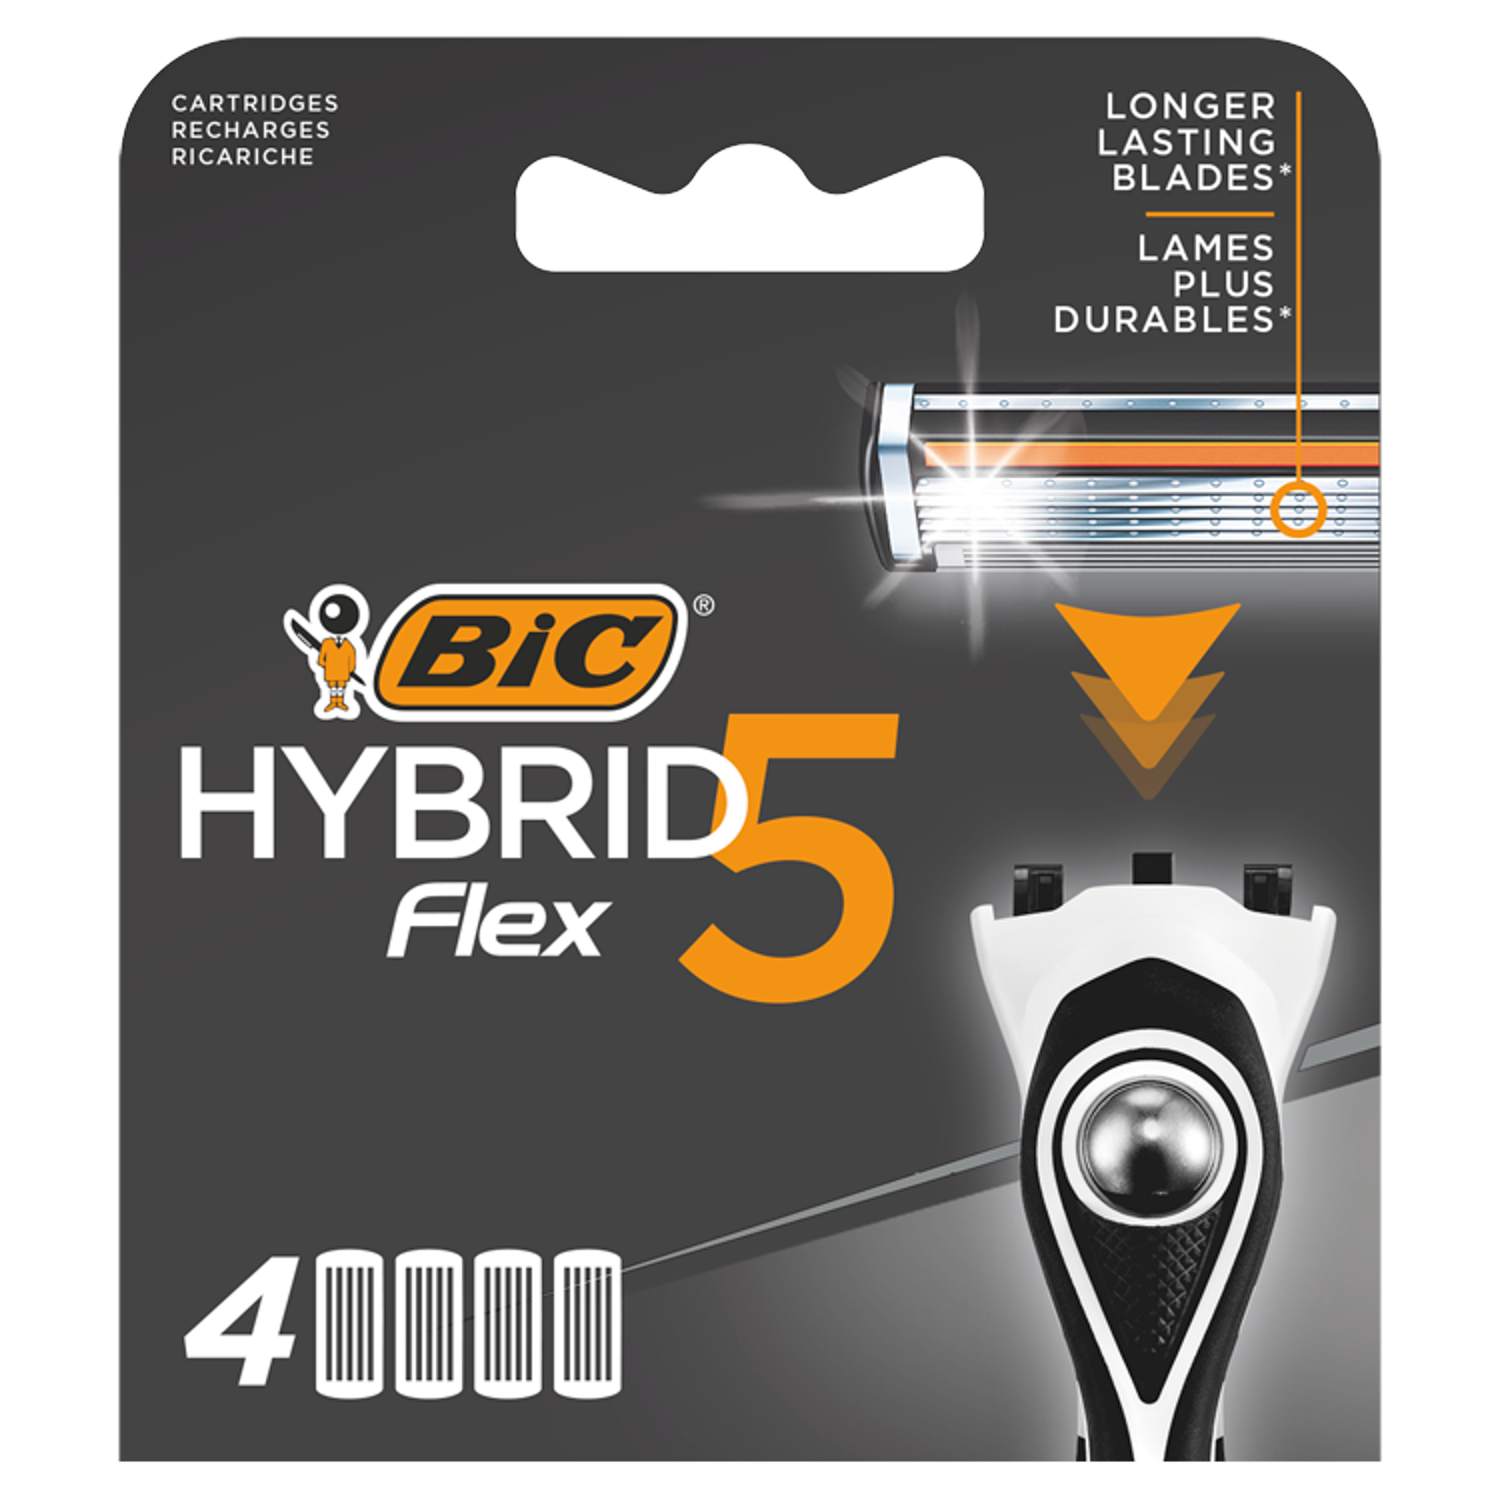 Bic Hybrid5 Flex картриджи для бритвы, 4 шт/1 упаковка